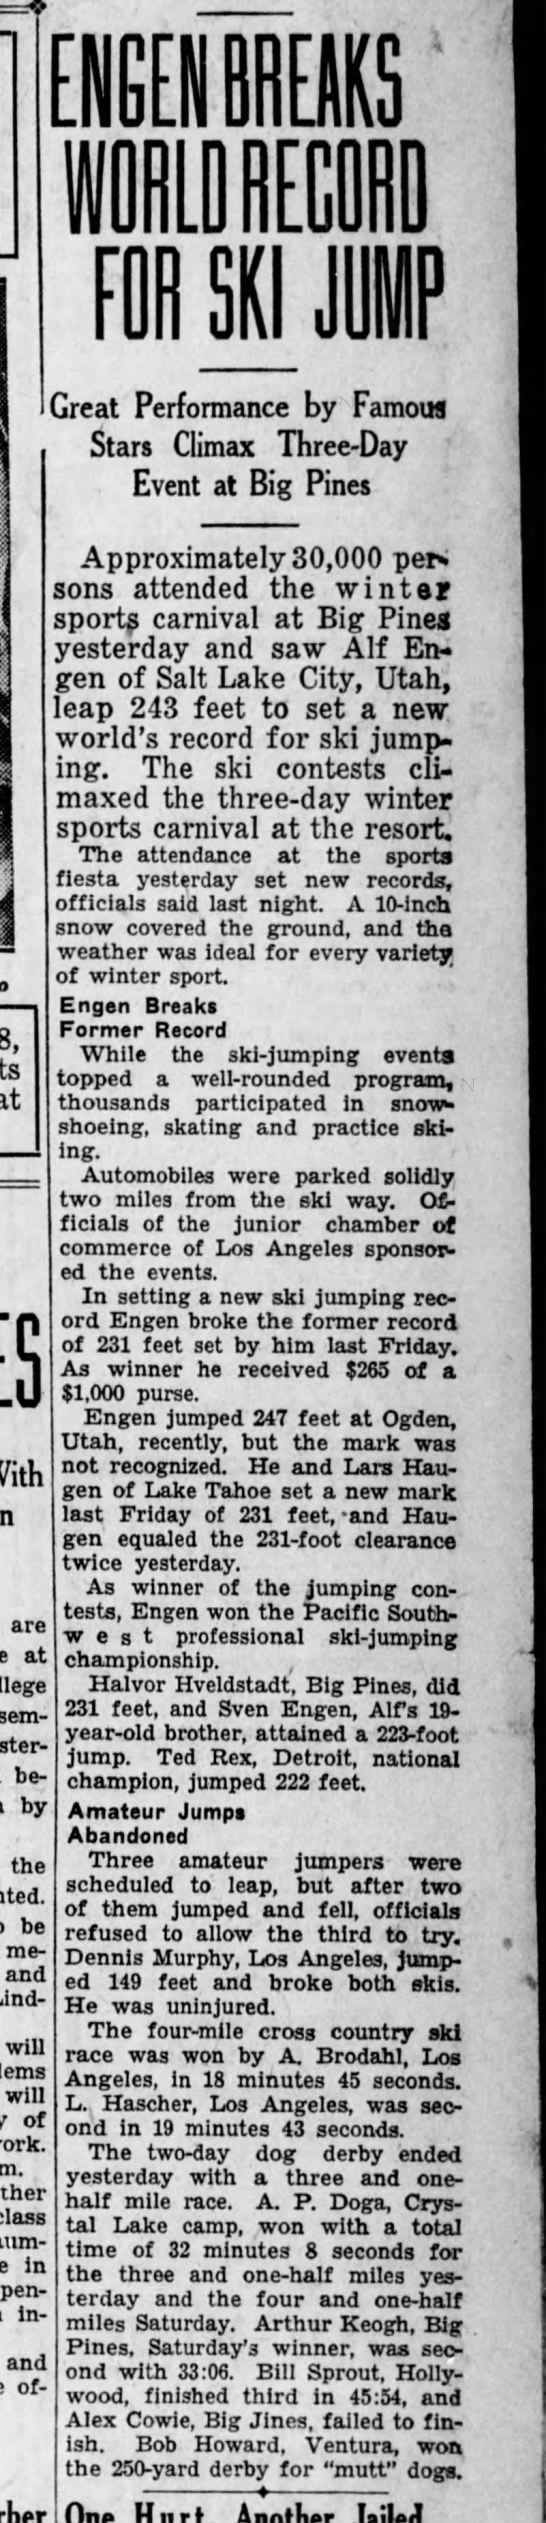 Engen Breaks World Record Ski Jump Feb 2 1931 - 